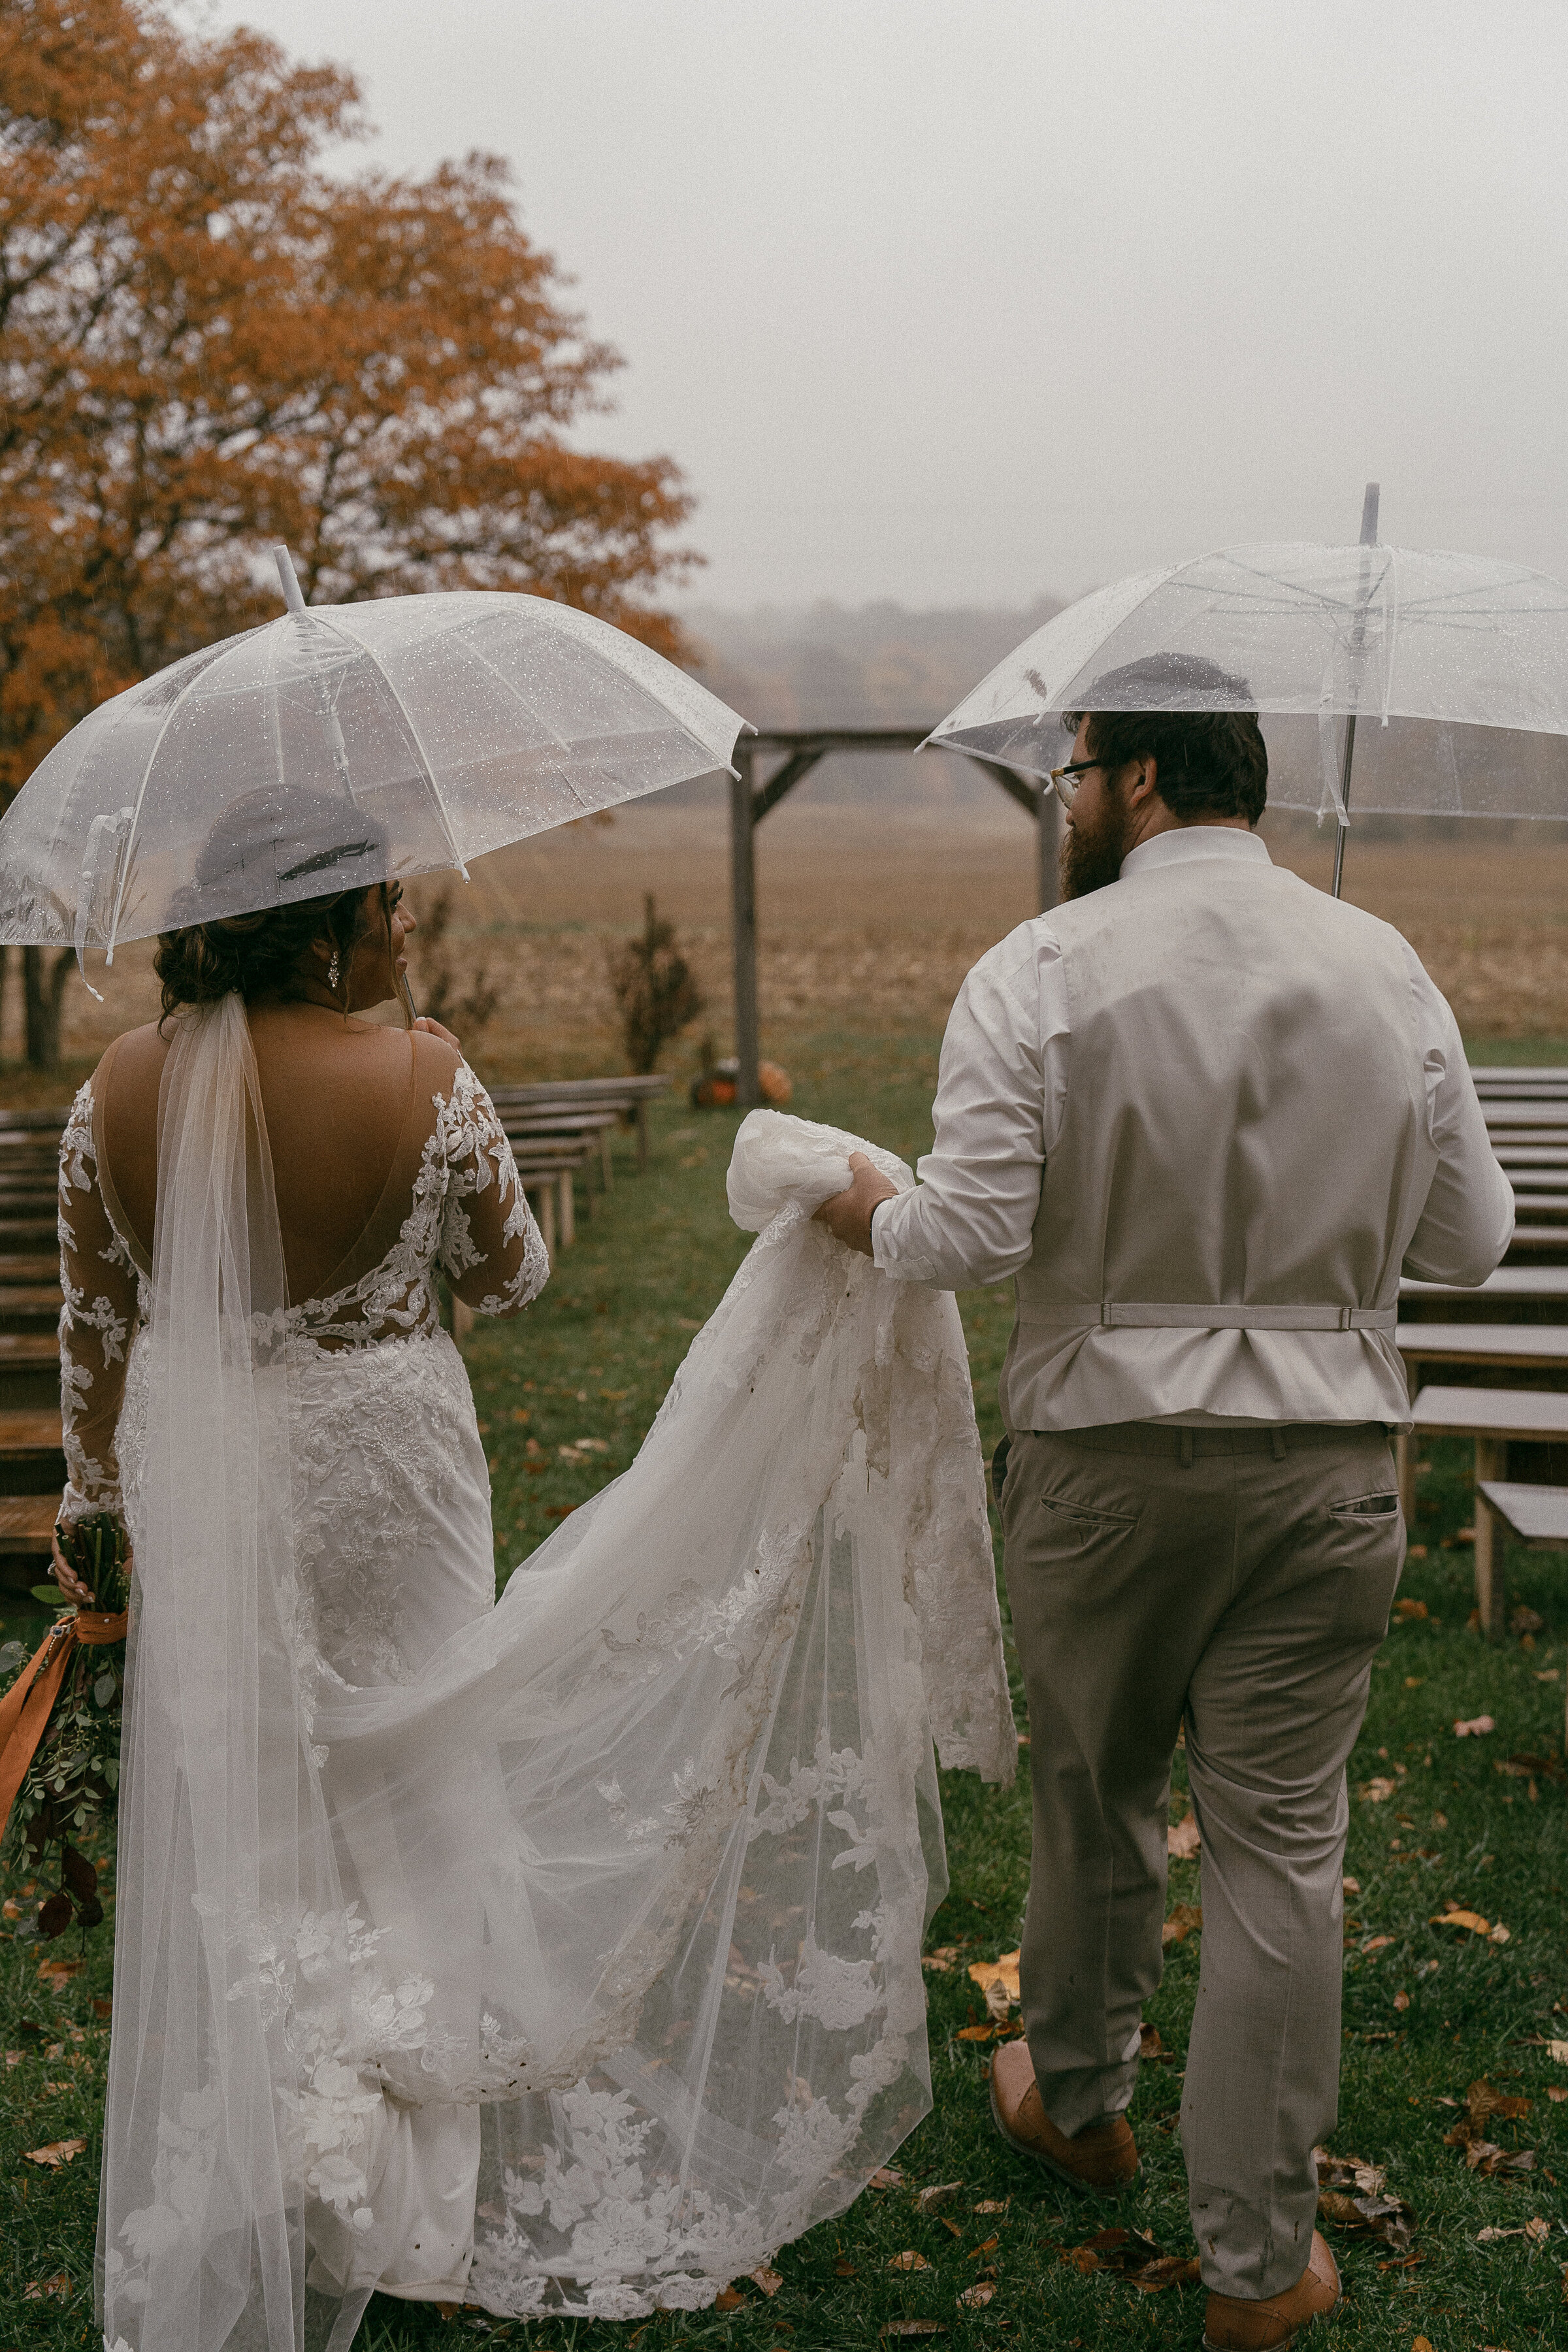 Bride and groom with umbrellas in rain.